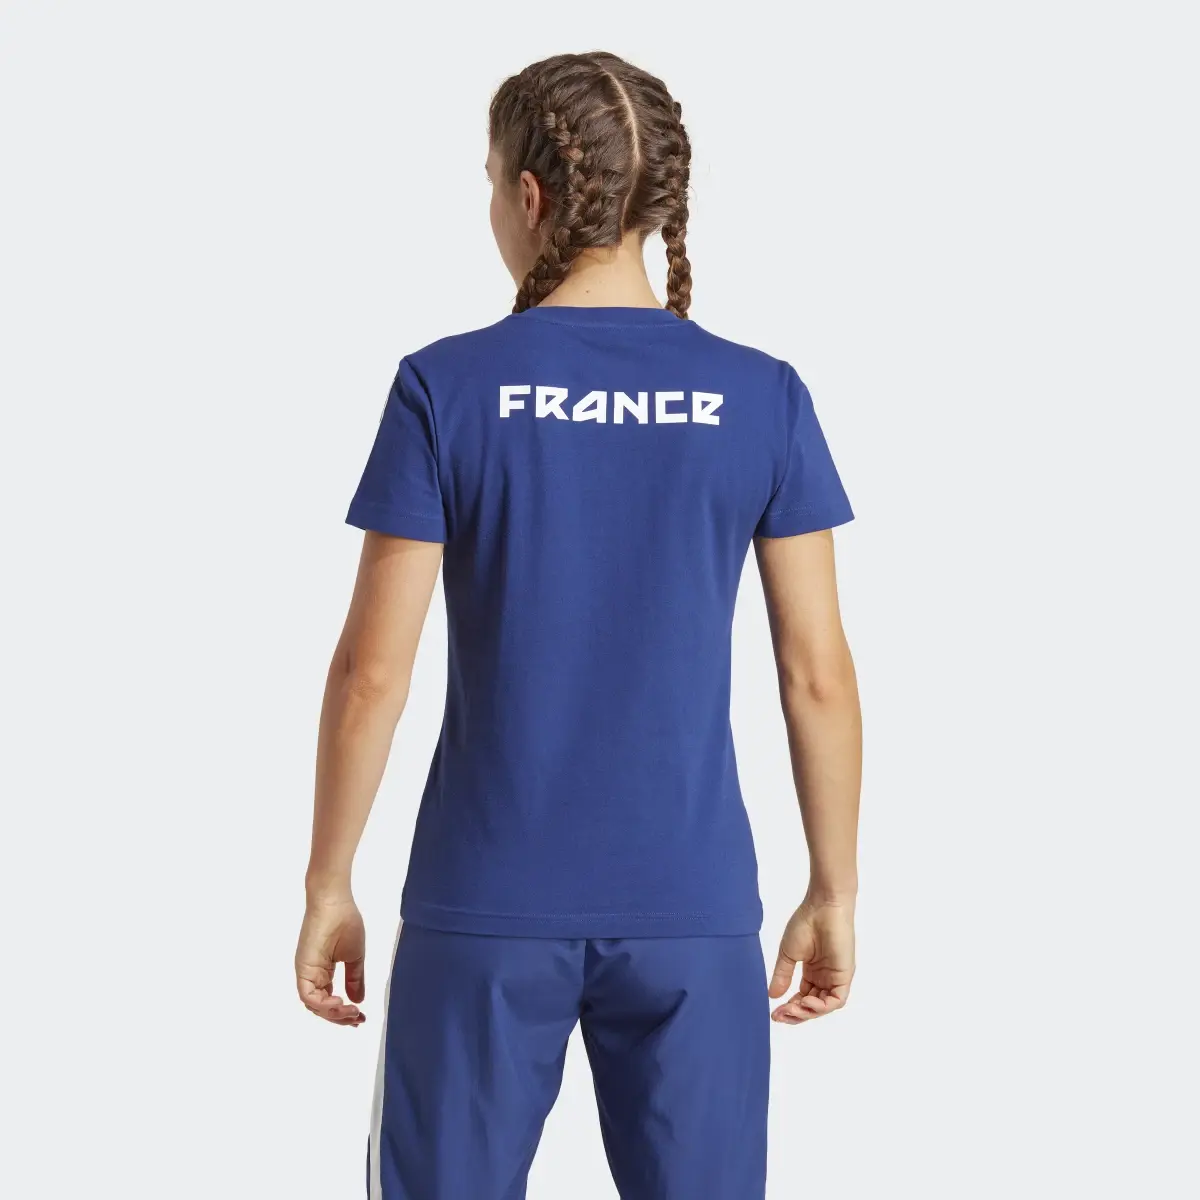 Adidas T-shirt France Cotton Graphic. 3